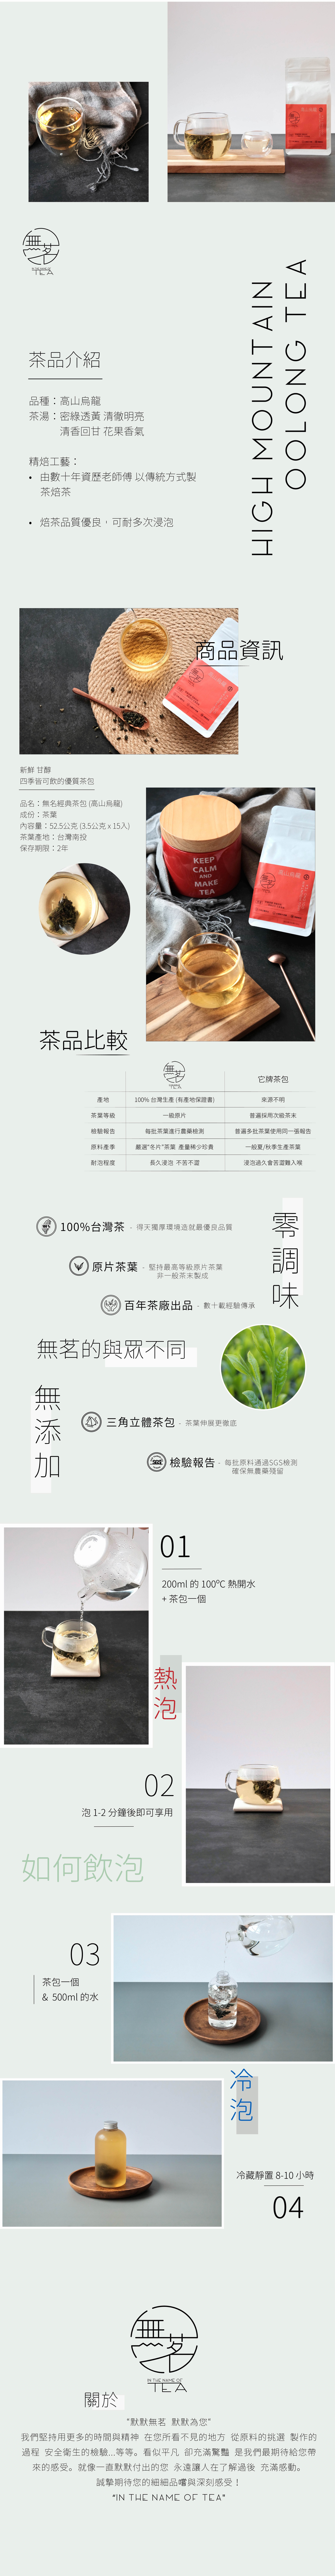 高山烏龍 Website Tea Bag Description Complete.jpg